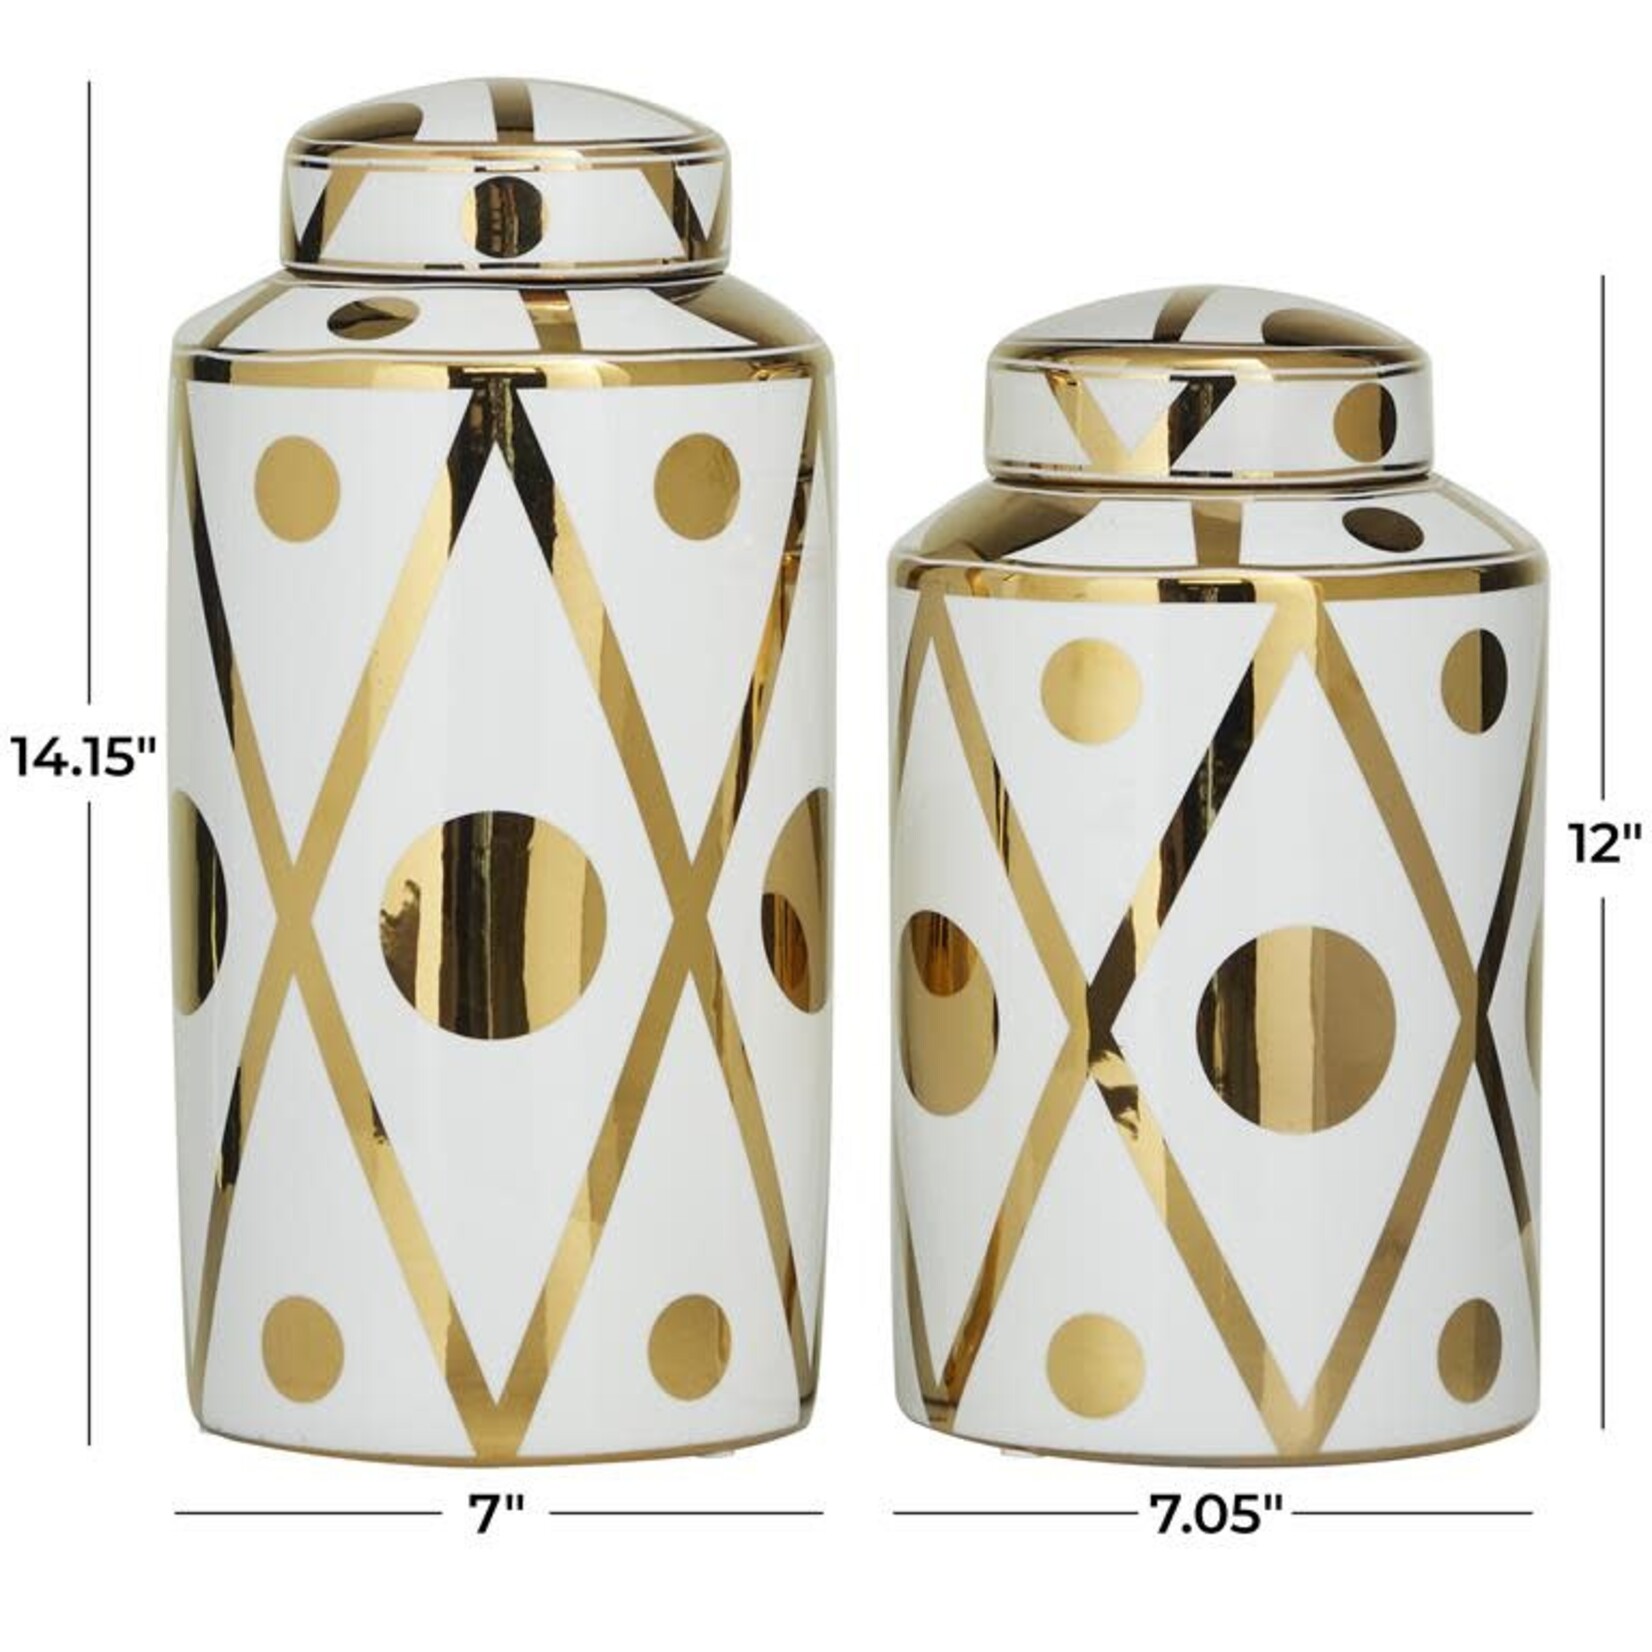 UMA Enterprises 29621S White Ceramic Geometric Decorative Jars Gold Accents 12" Small